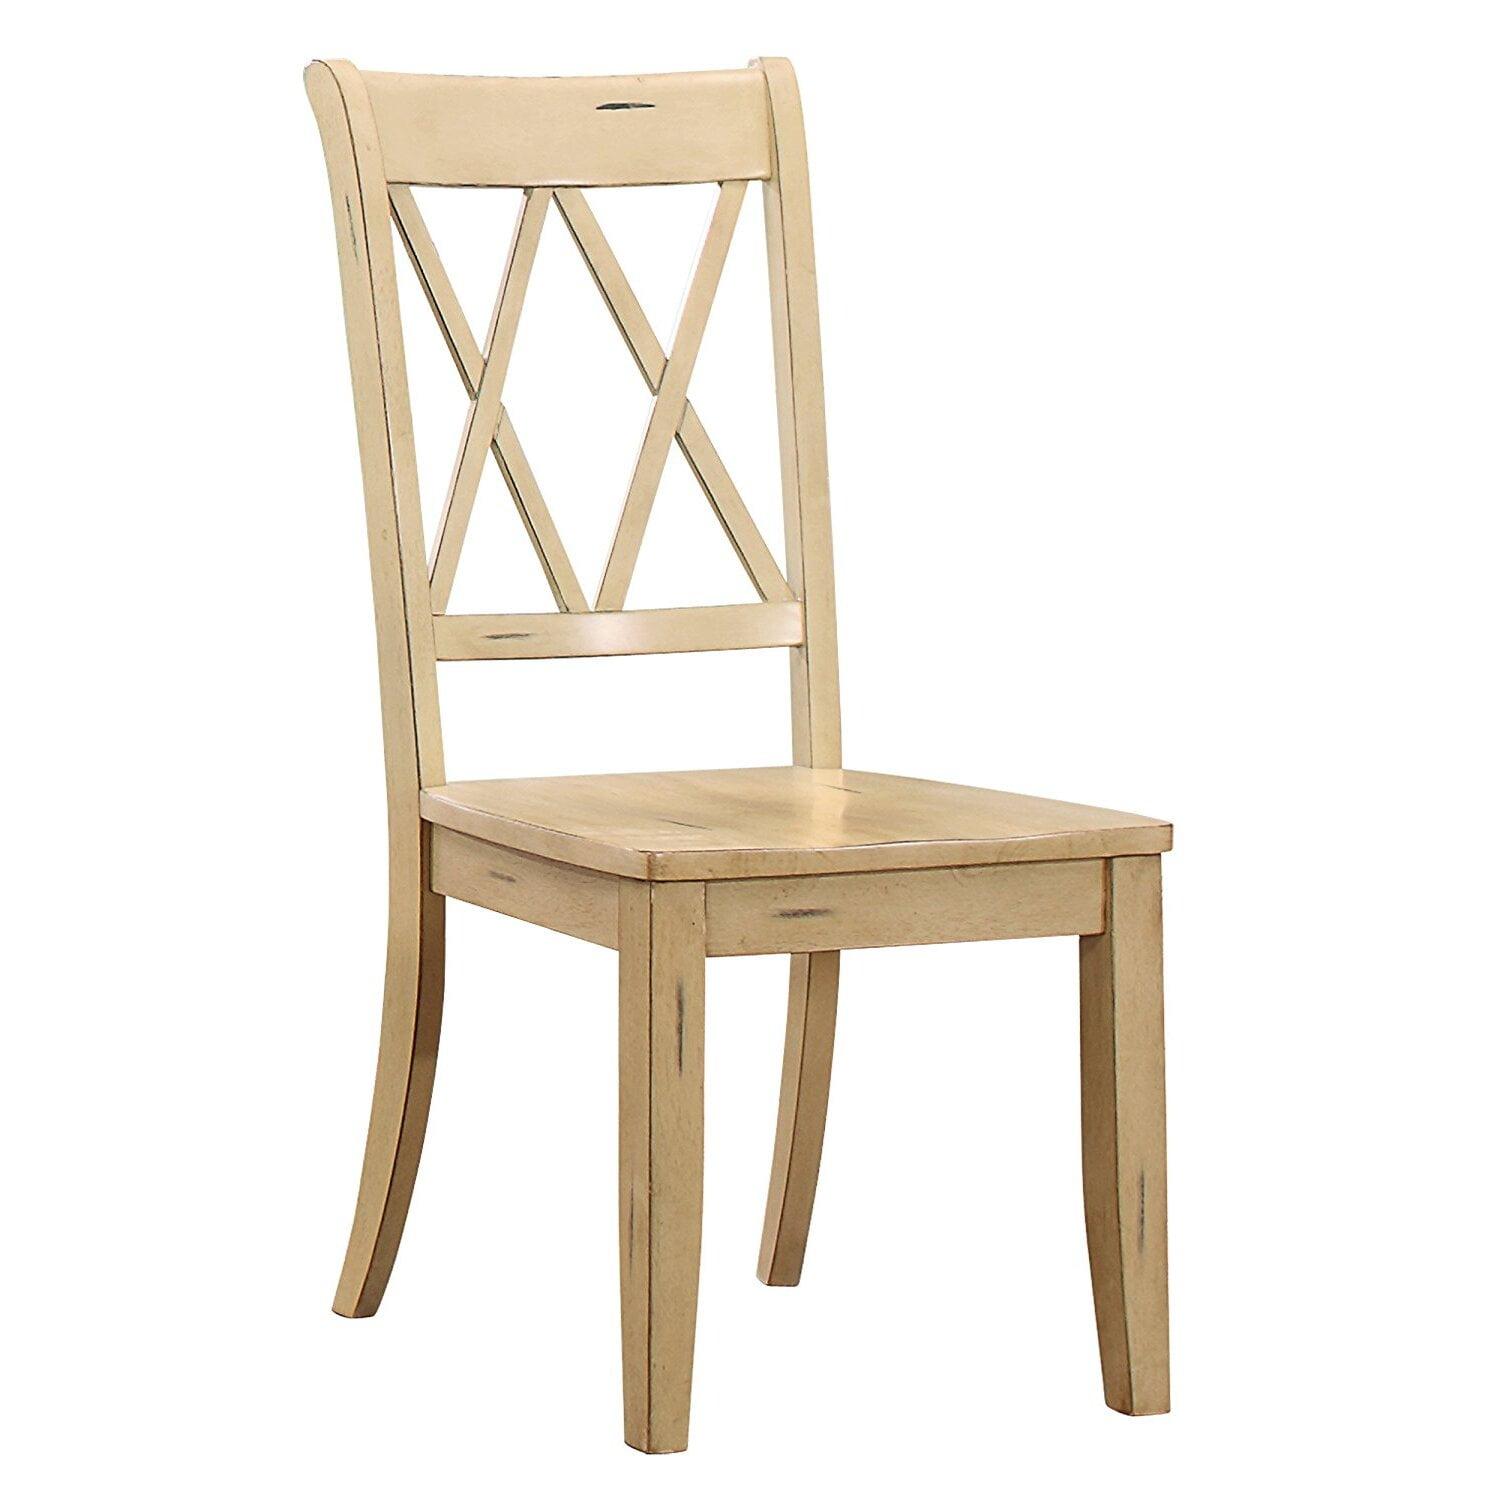 Sand Pine Veneer Side Chair with Double X-Cross Back